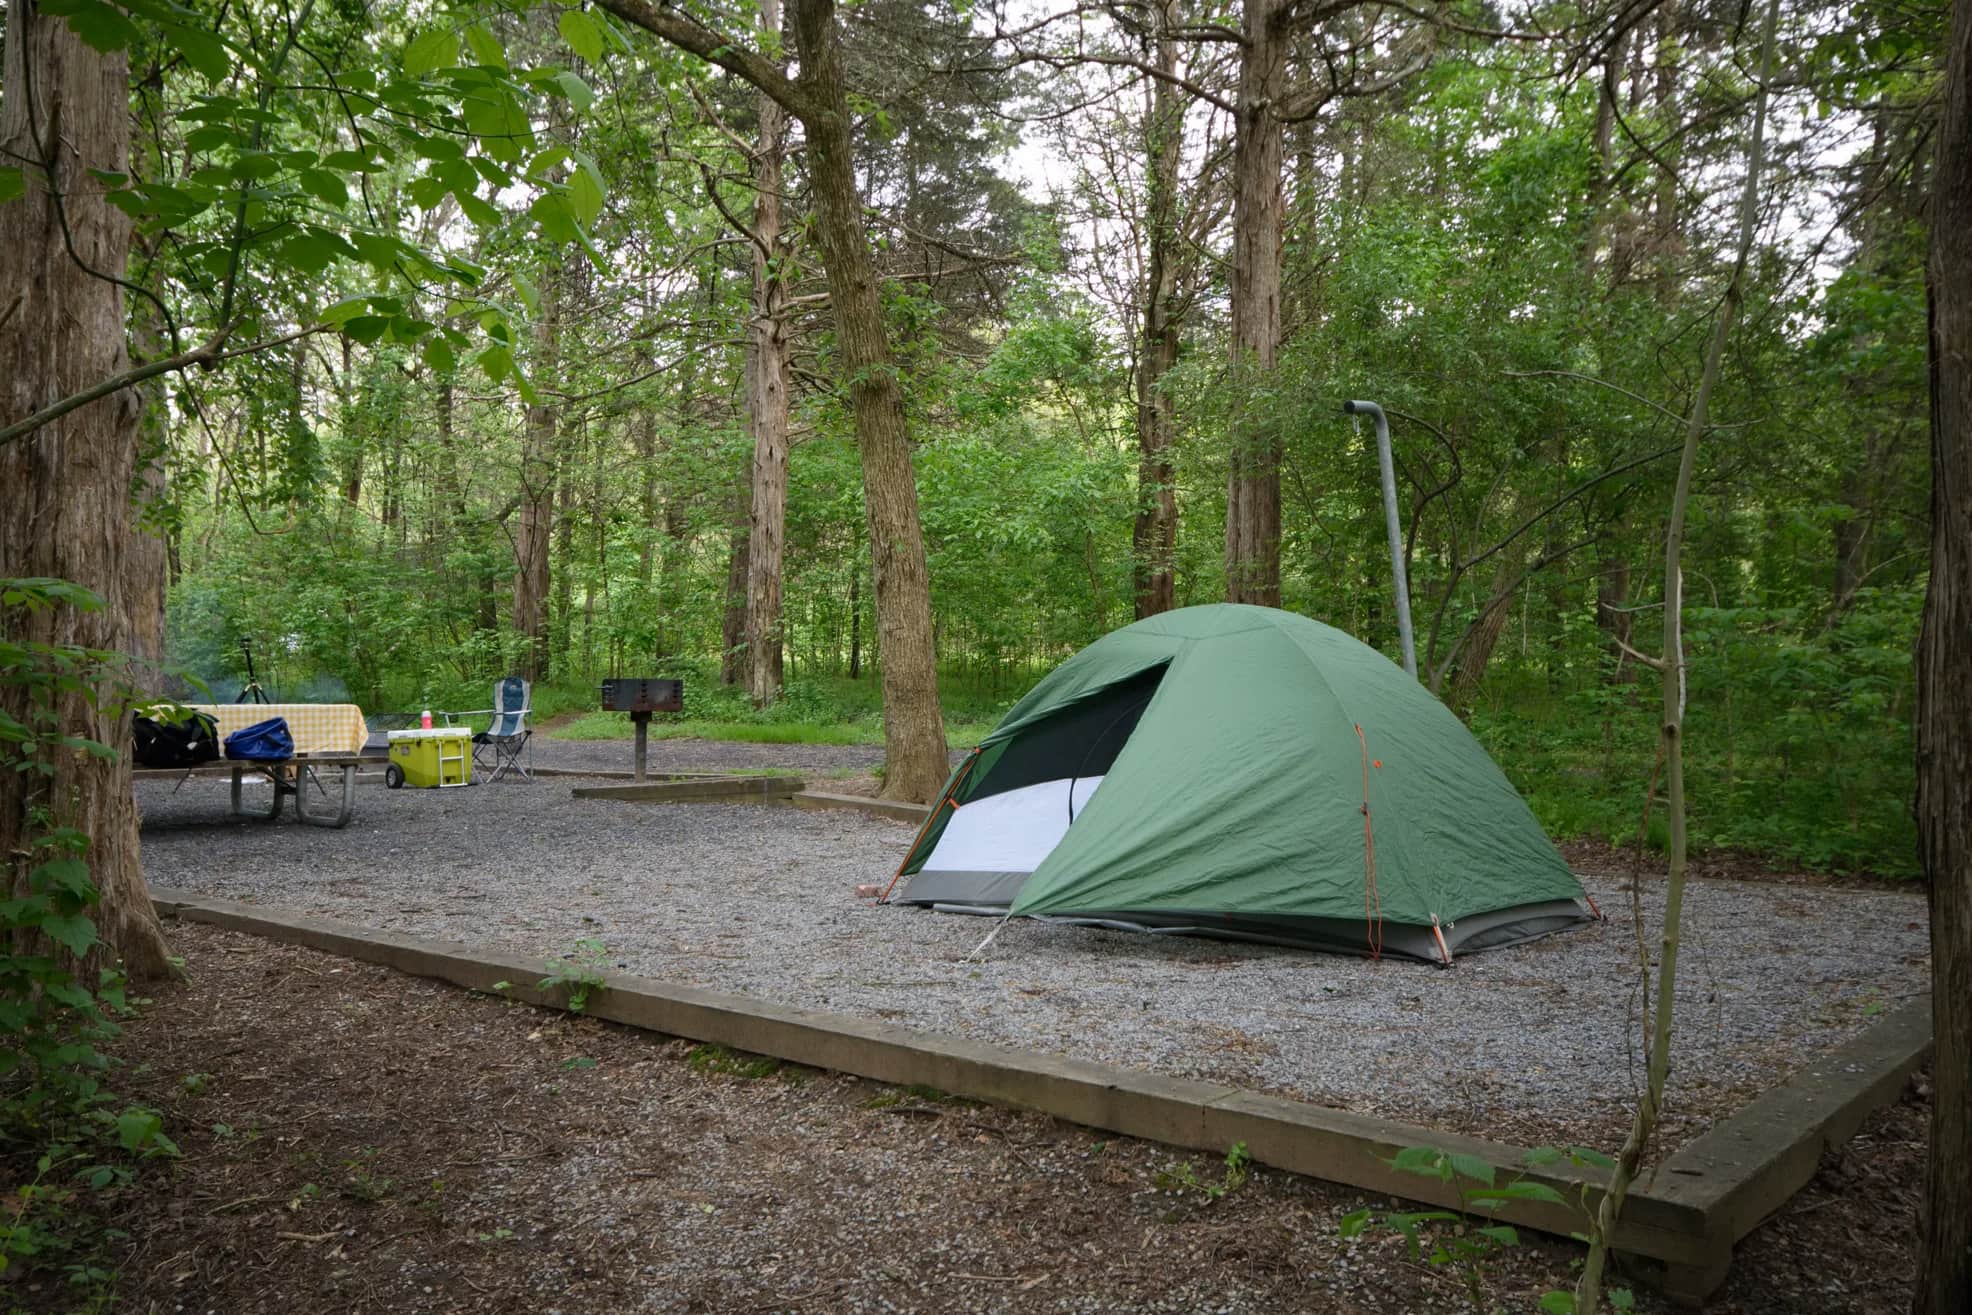 Green tent set up on gravel platform in forested campsite.